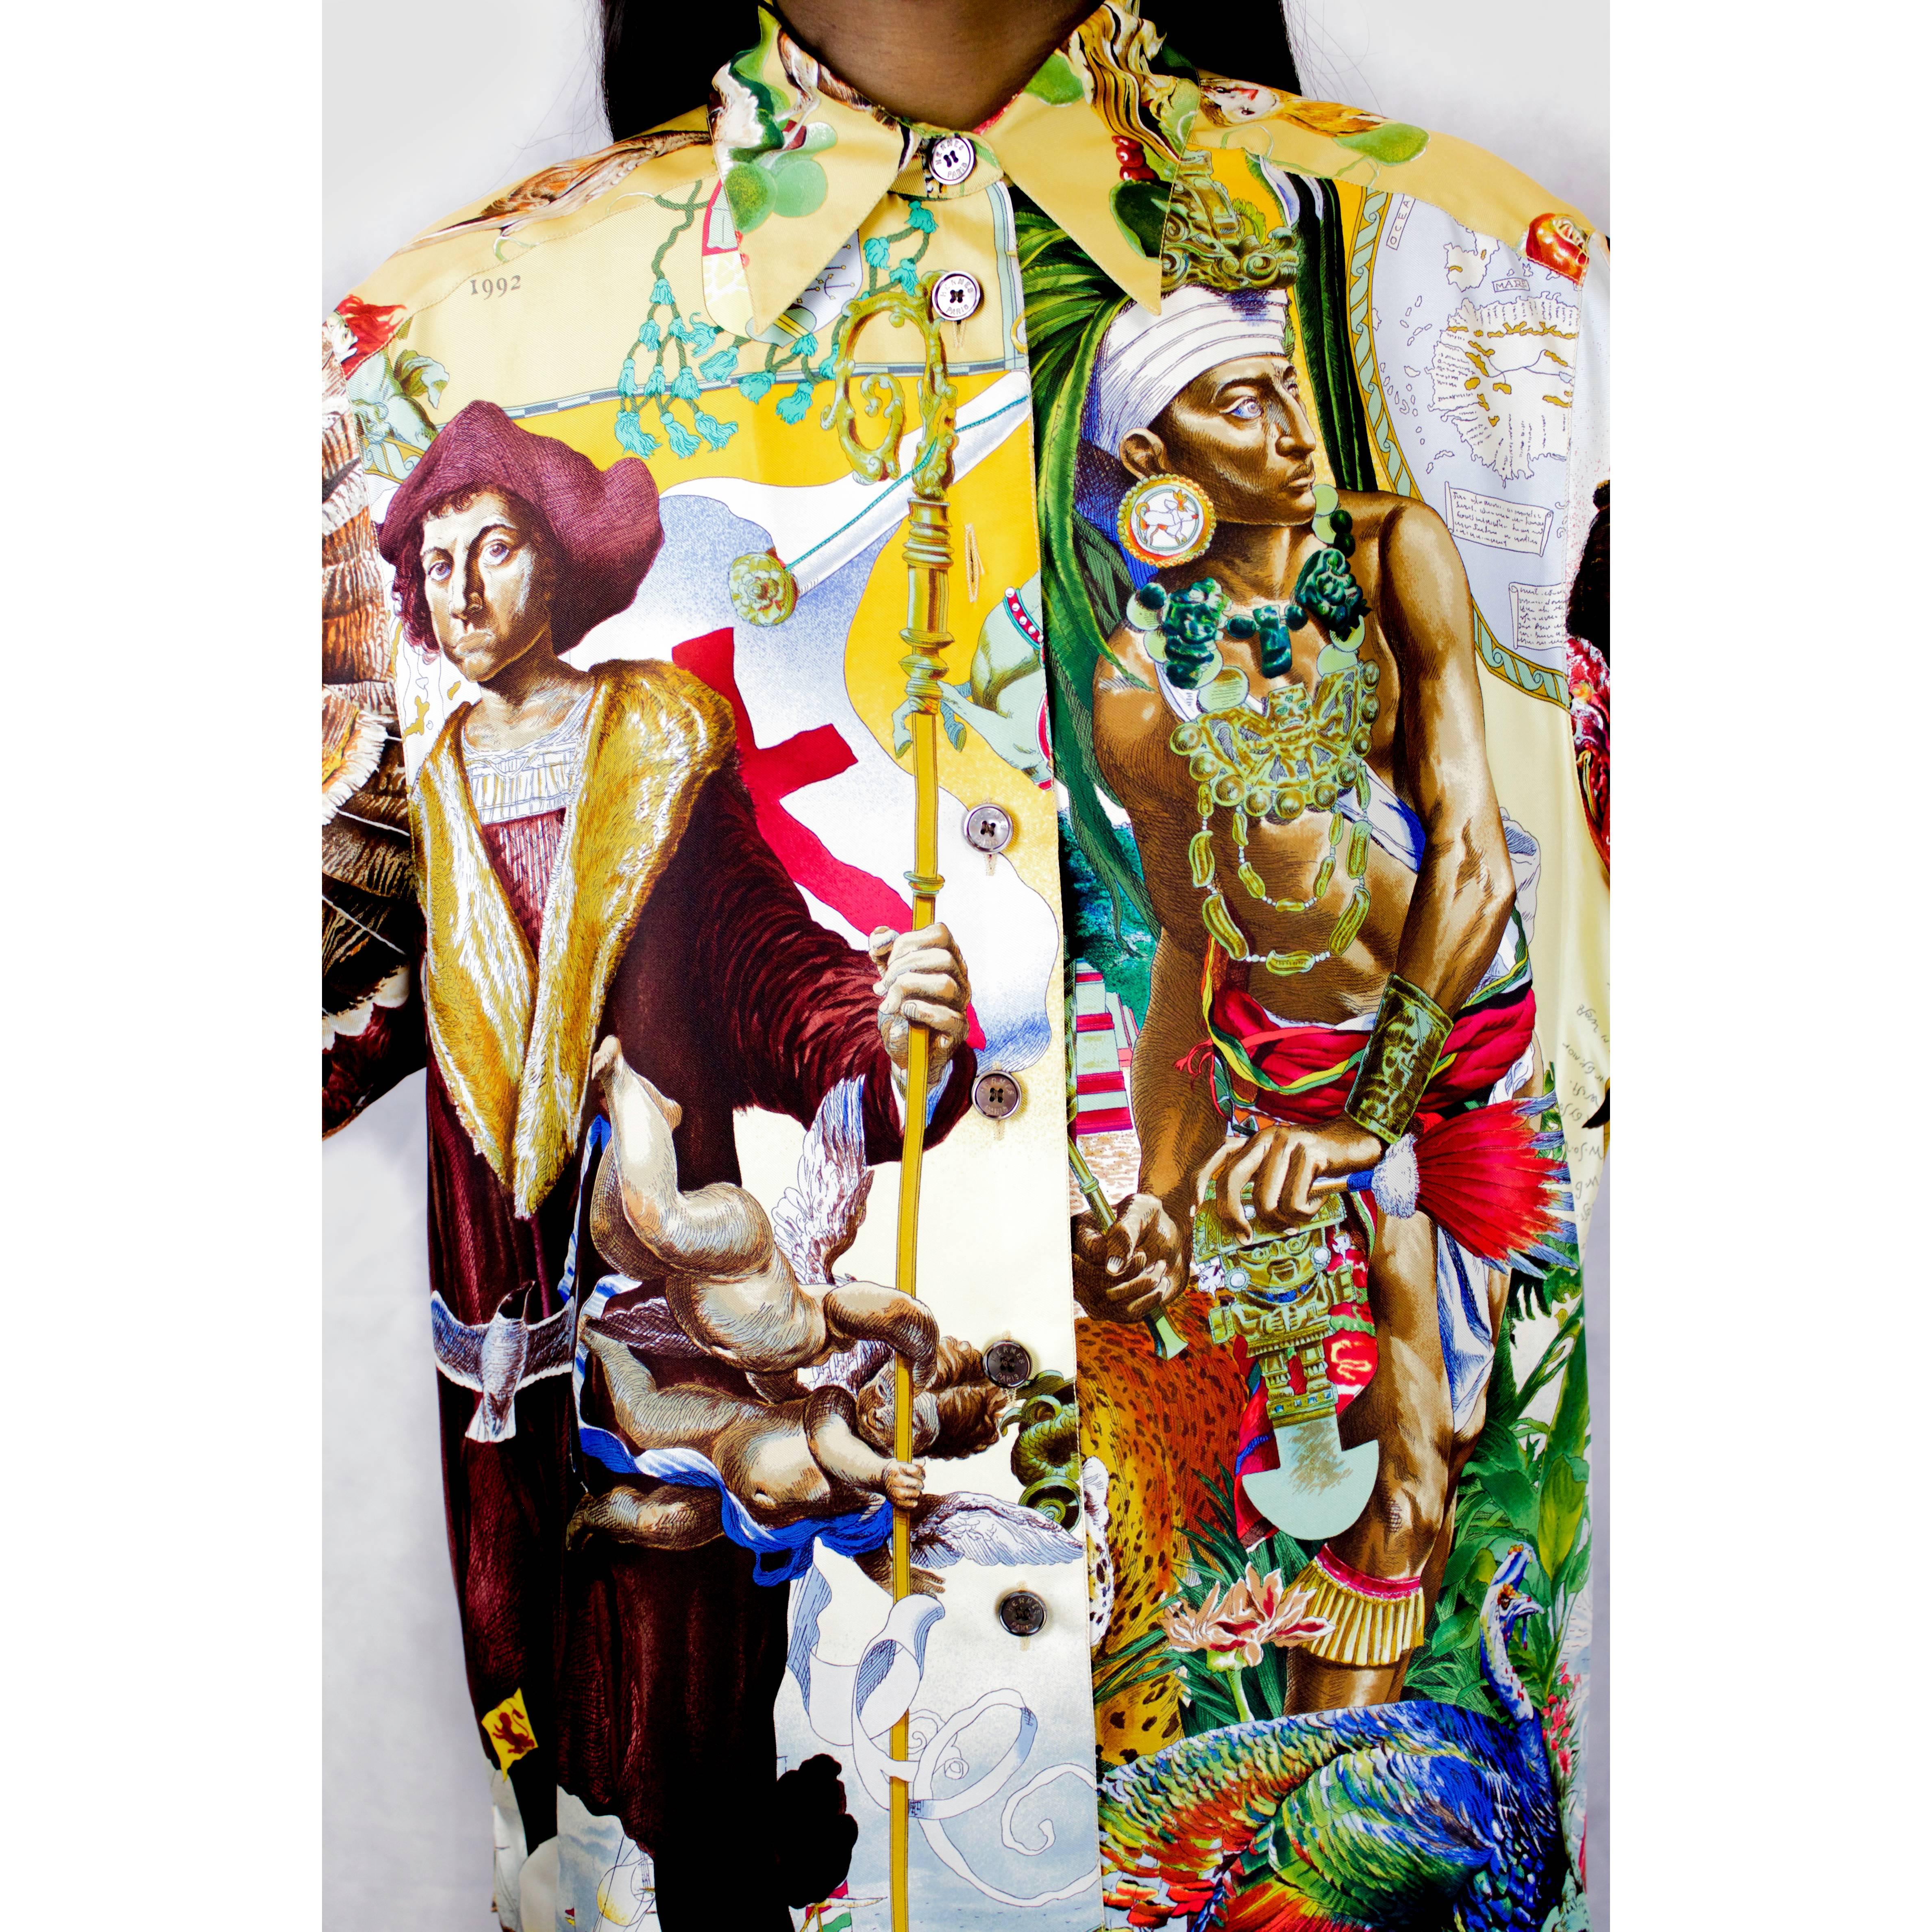 Beige Hermes rare fashion history silk shirt  art by kermit Oliver. Circa 1992